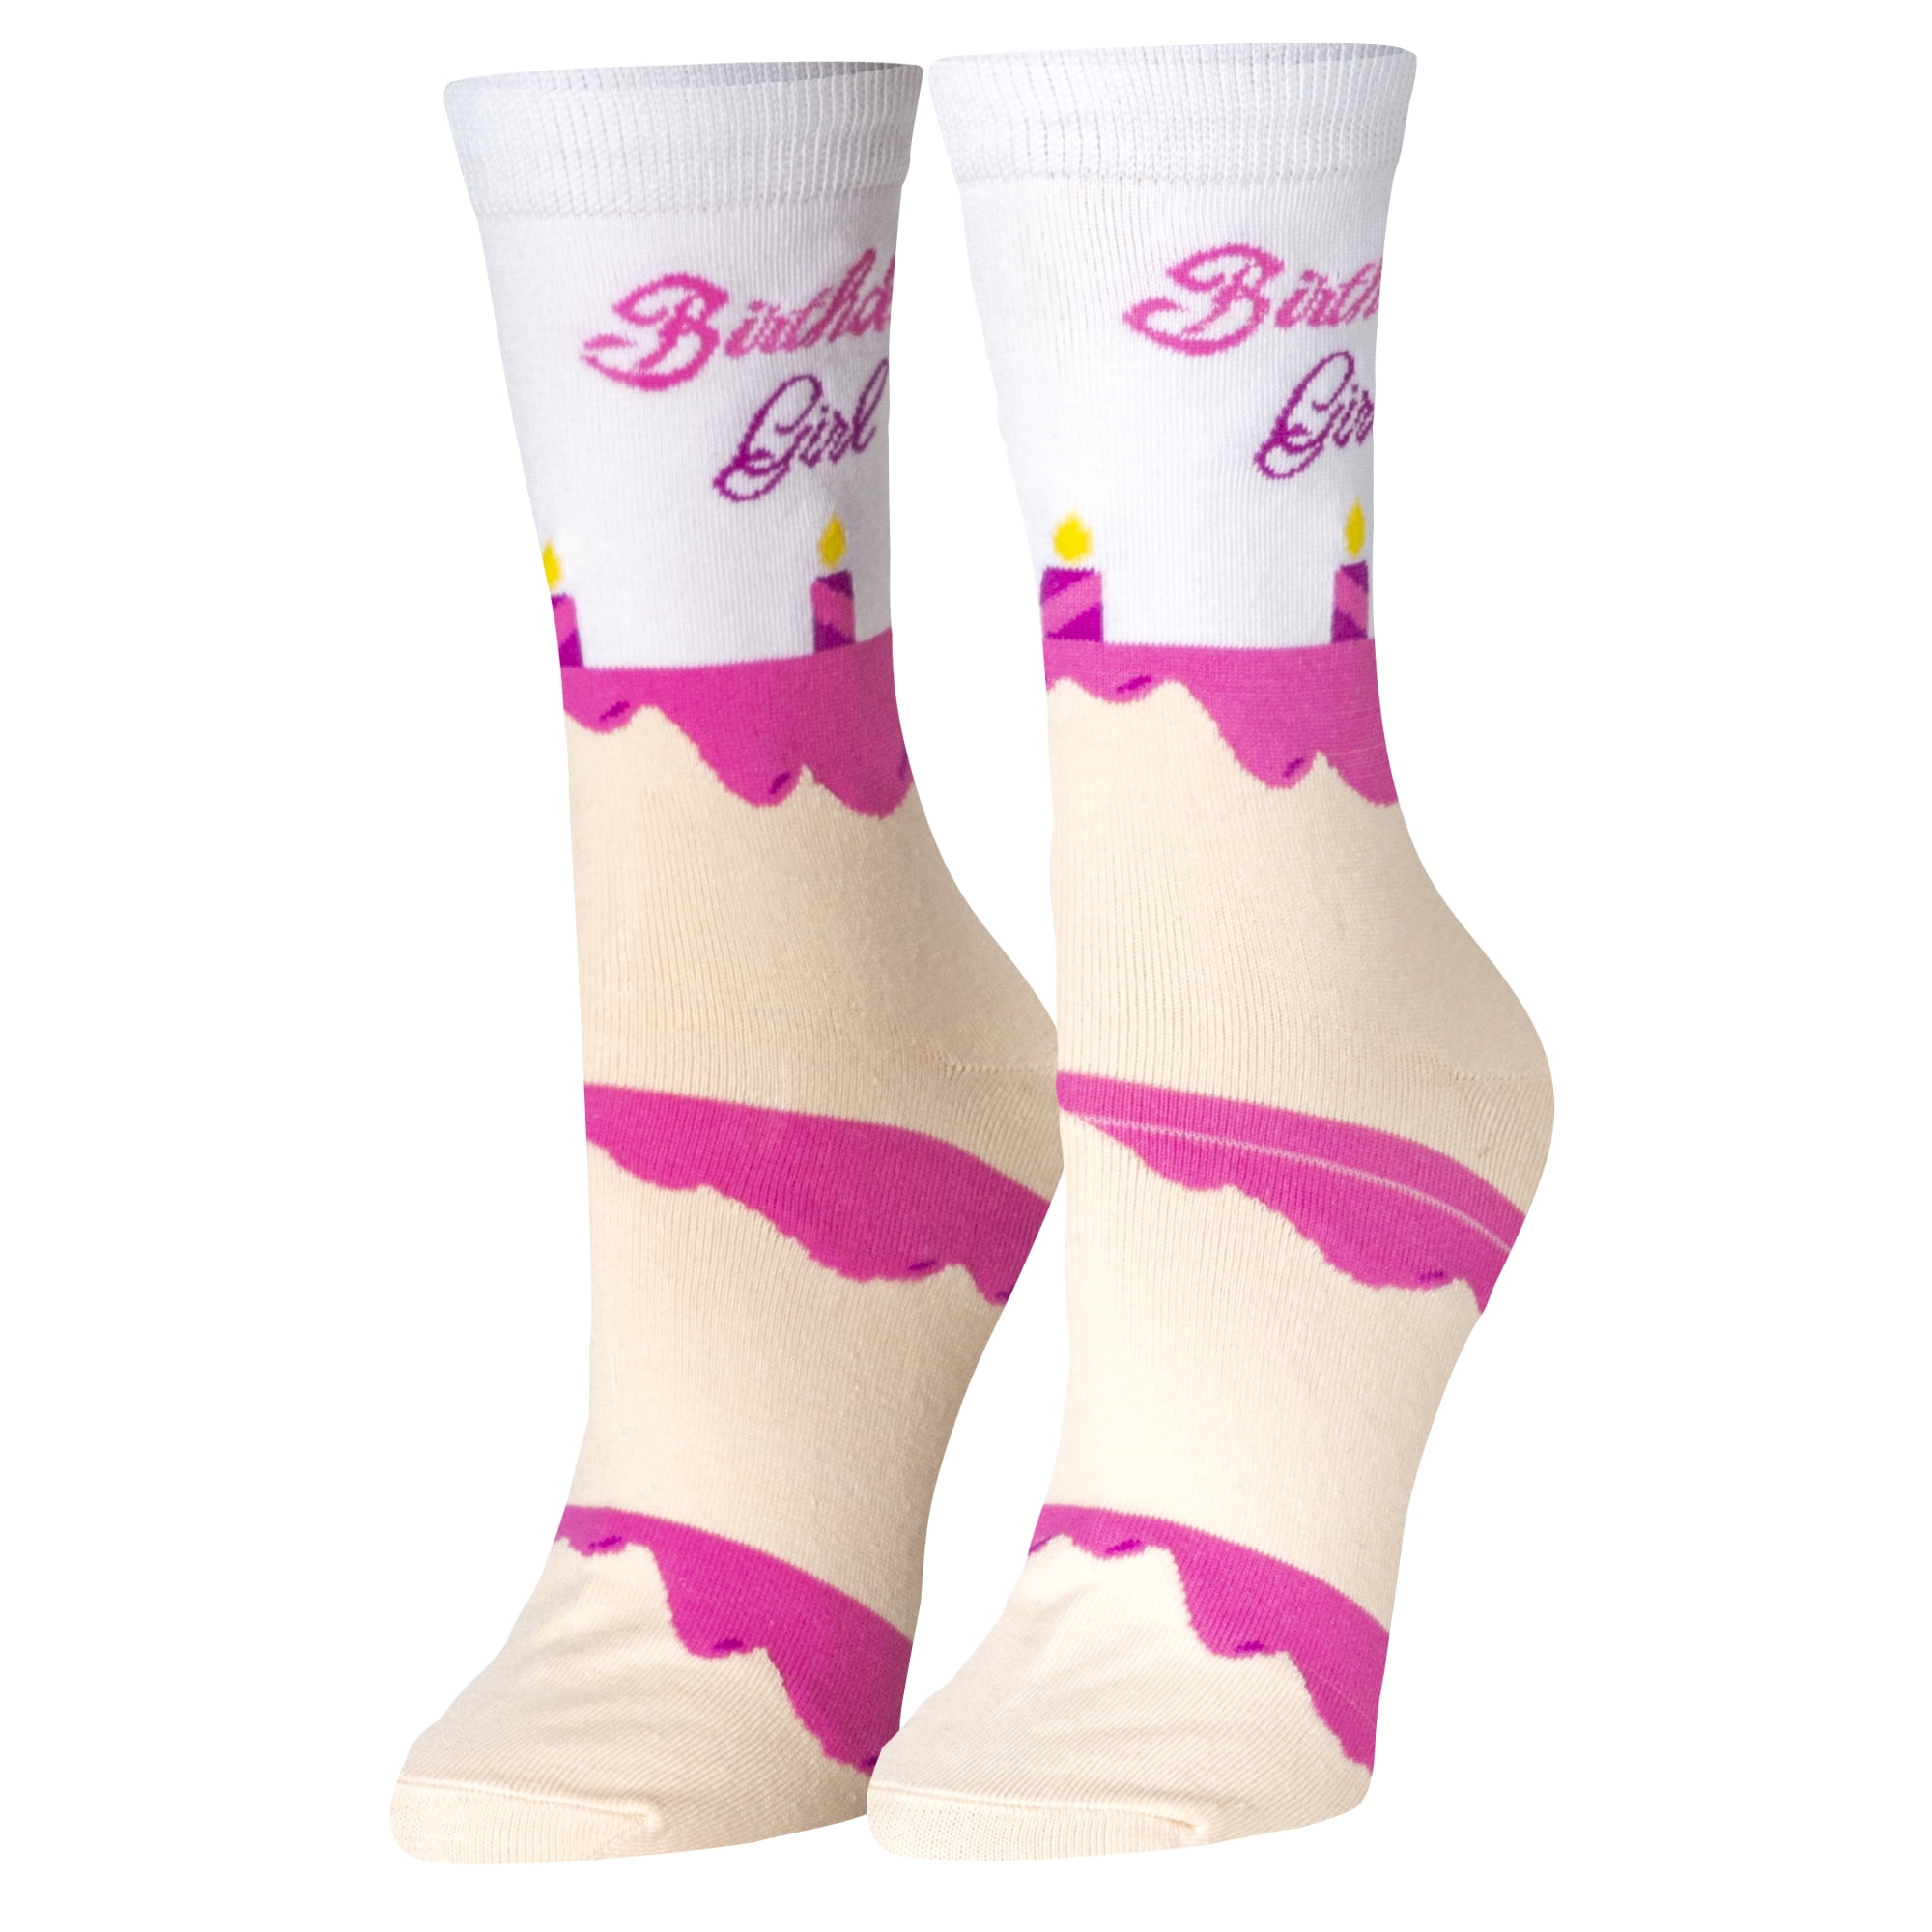 Crazy Socks, Old Bay, Funny Socks for Men Women, Fun Crew Print, Large